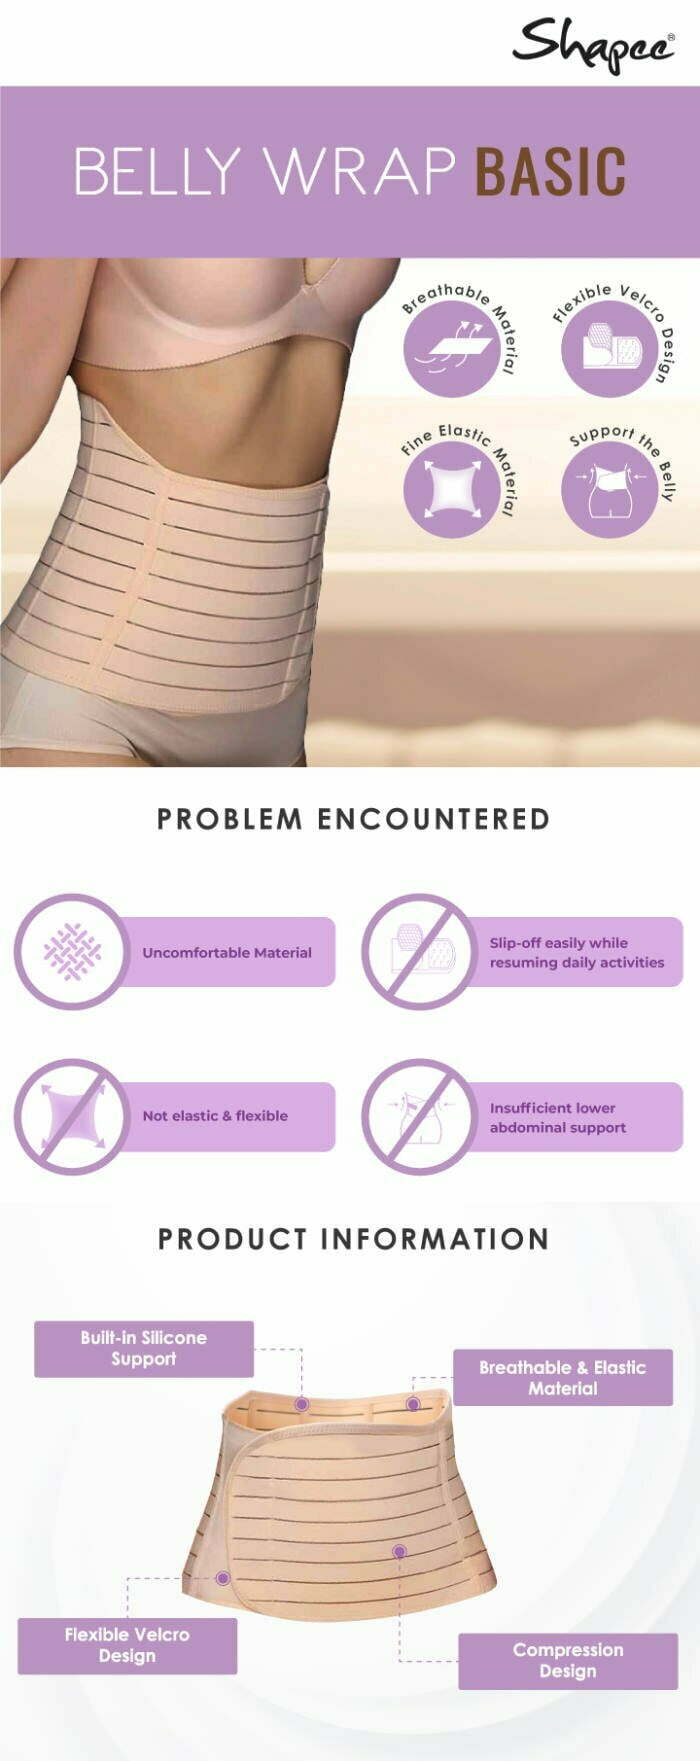 Shapee Belly Wrap Basic Product Descriptions